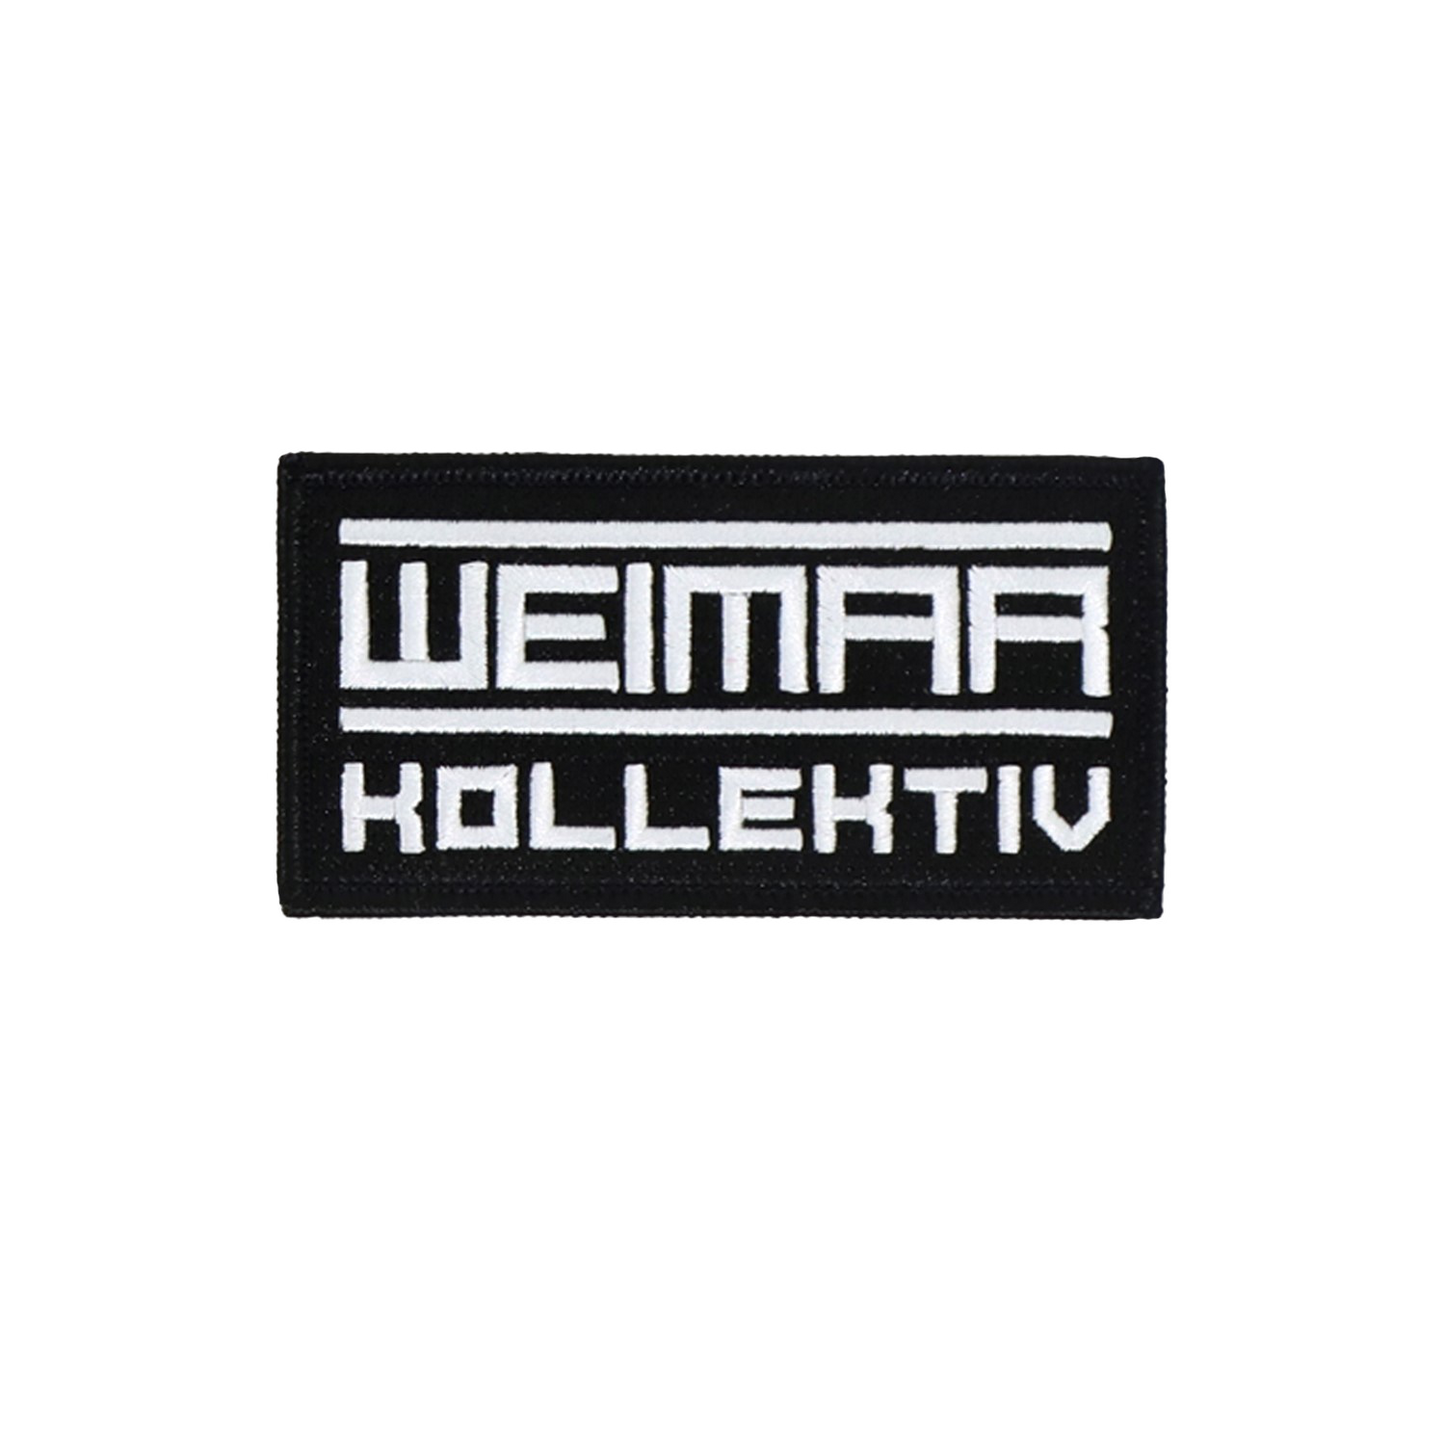 Patch "Weimar Kollektiv"